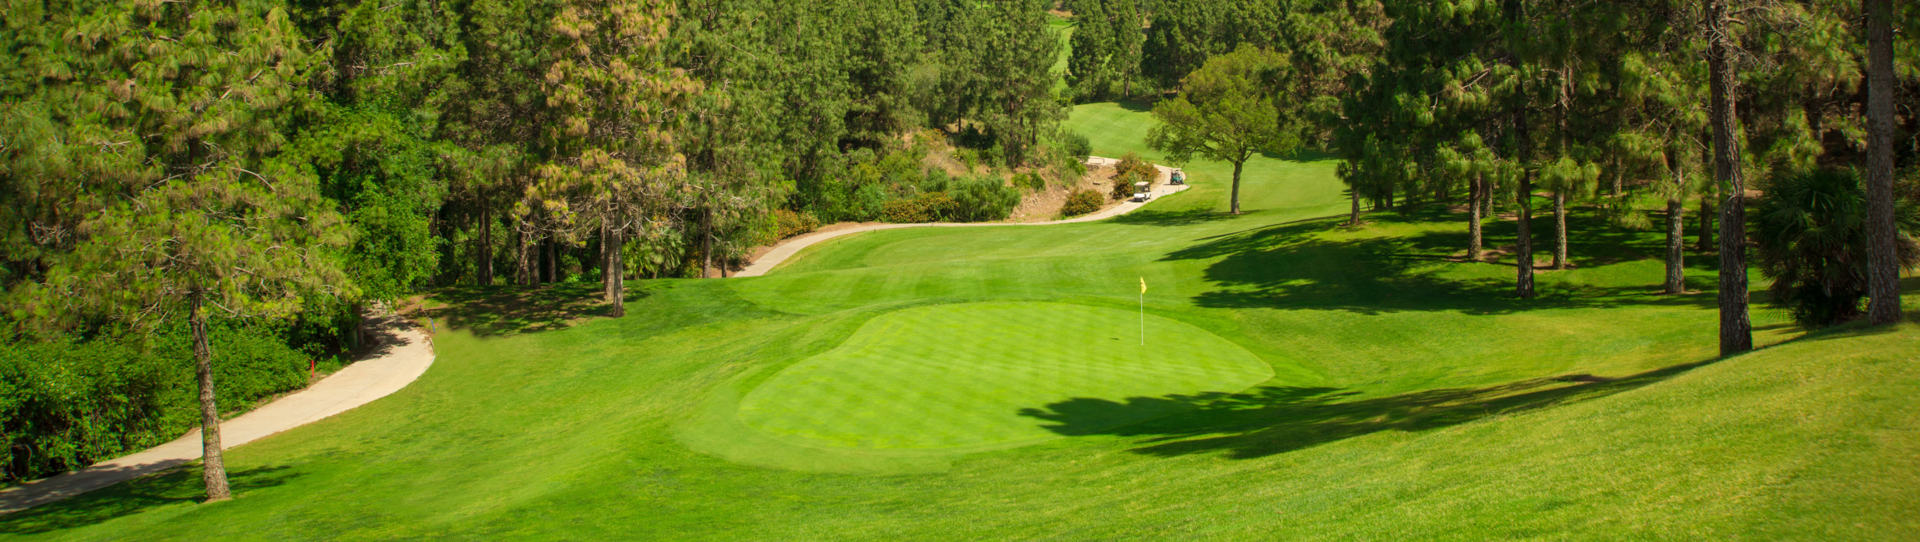 Spain golf courses - Chaparral Golf Course  - Photo 3